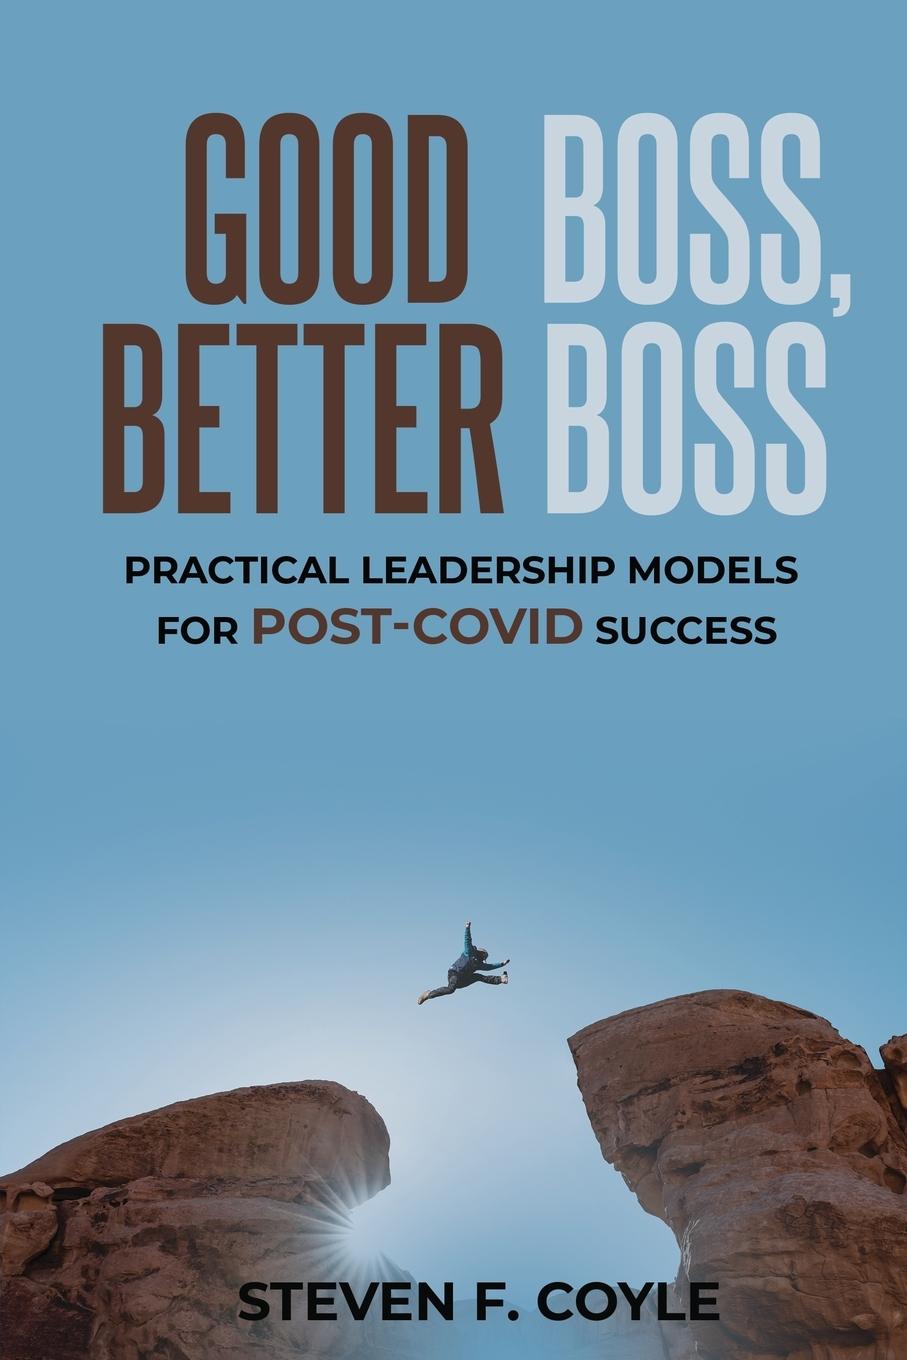 Kniha Good Boss, Better Boss Augustine Chay